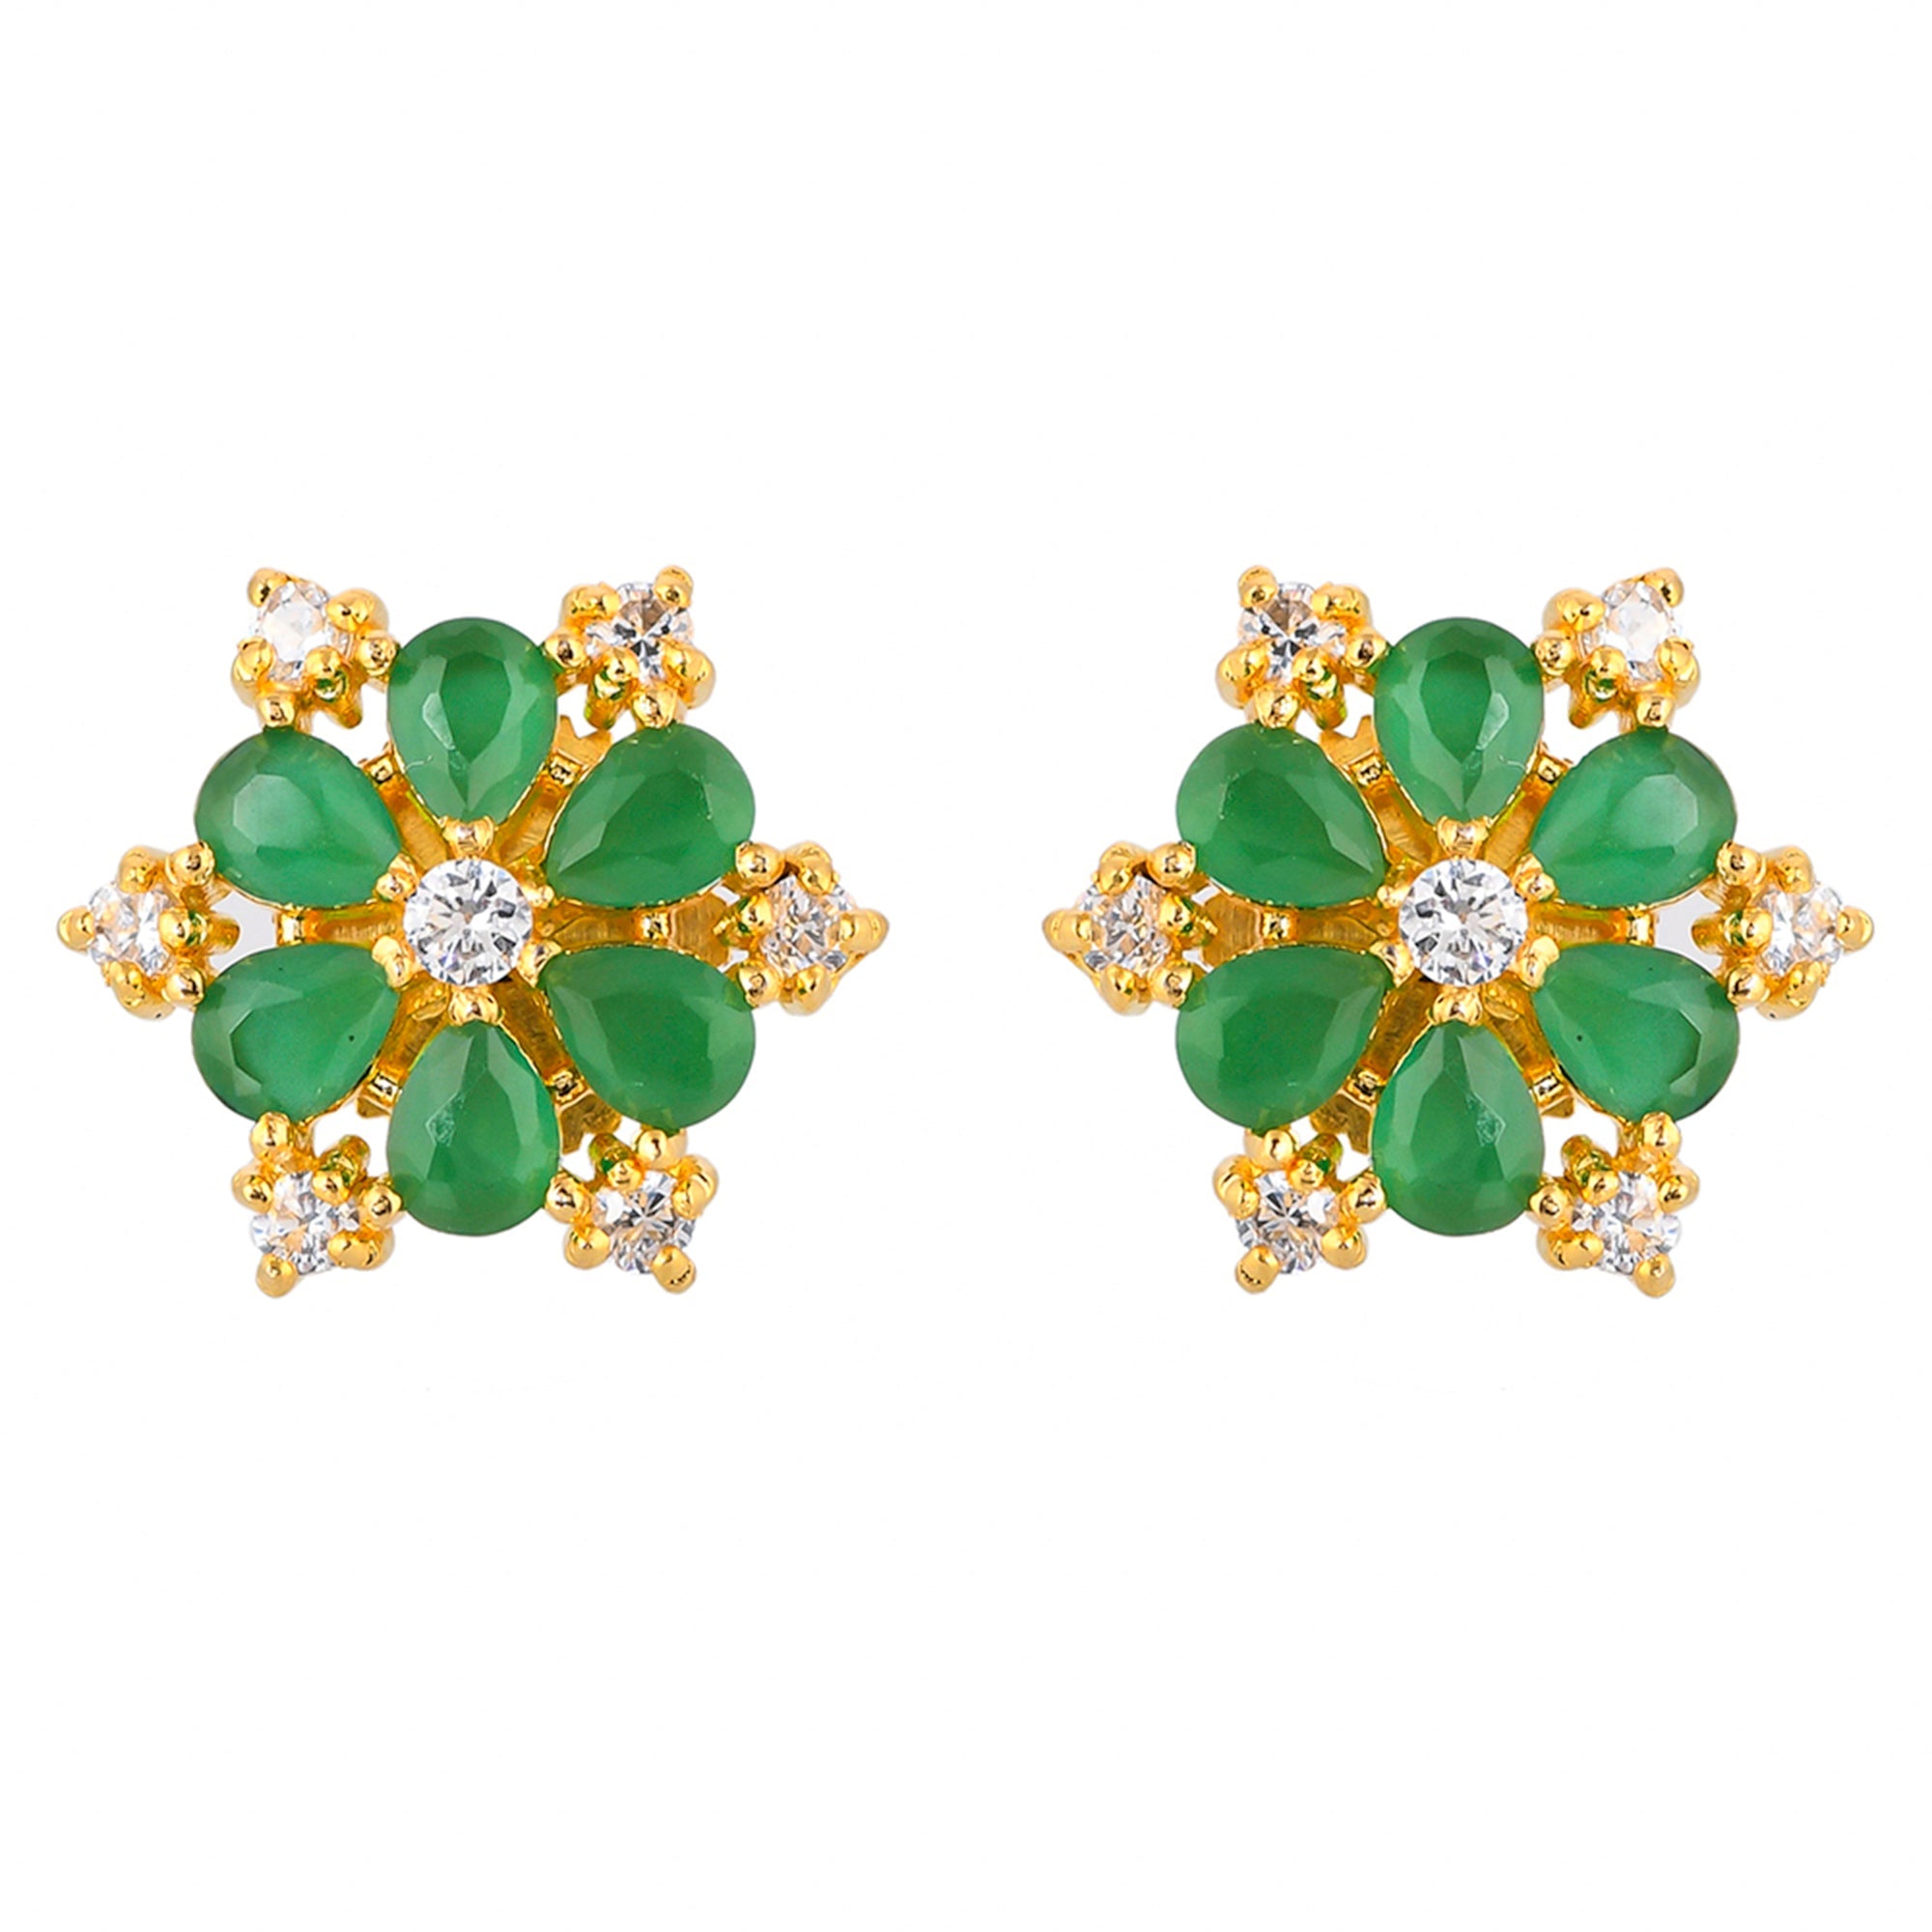 Women's Teardrop Green And White Cluster Setting Cz Stud Earrings - Voylla